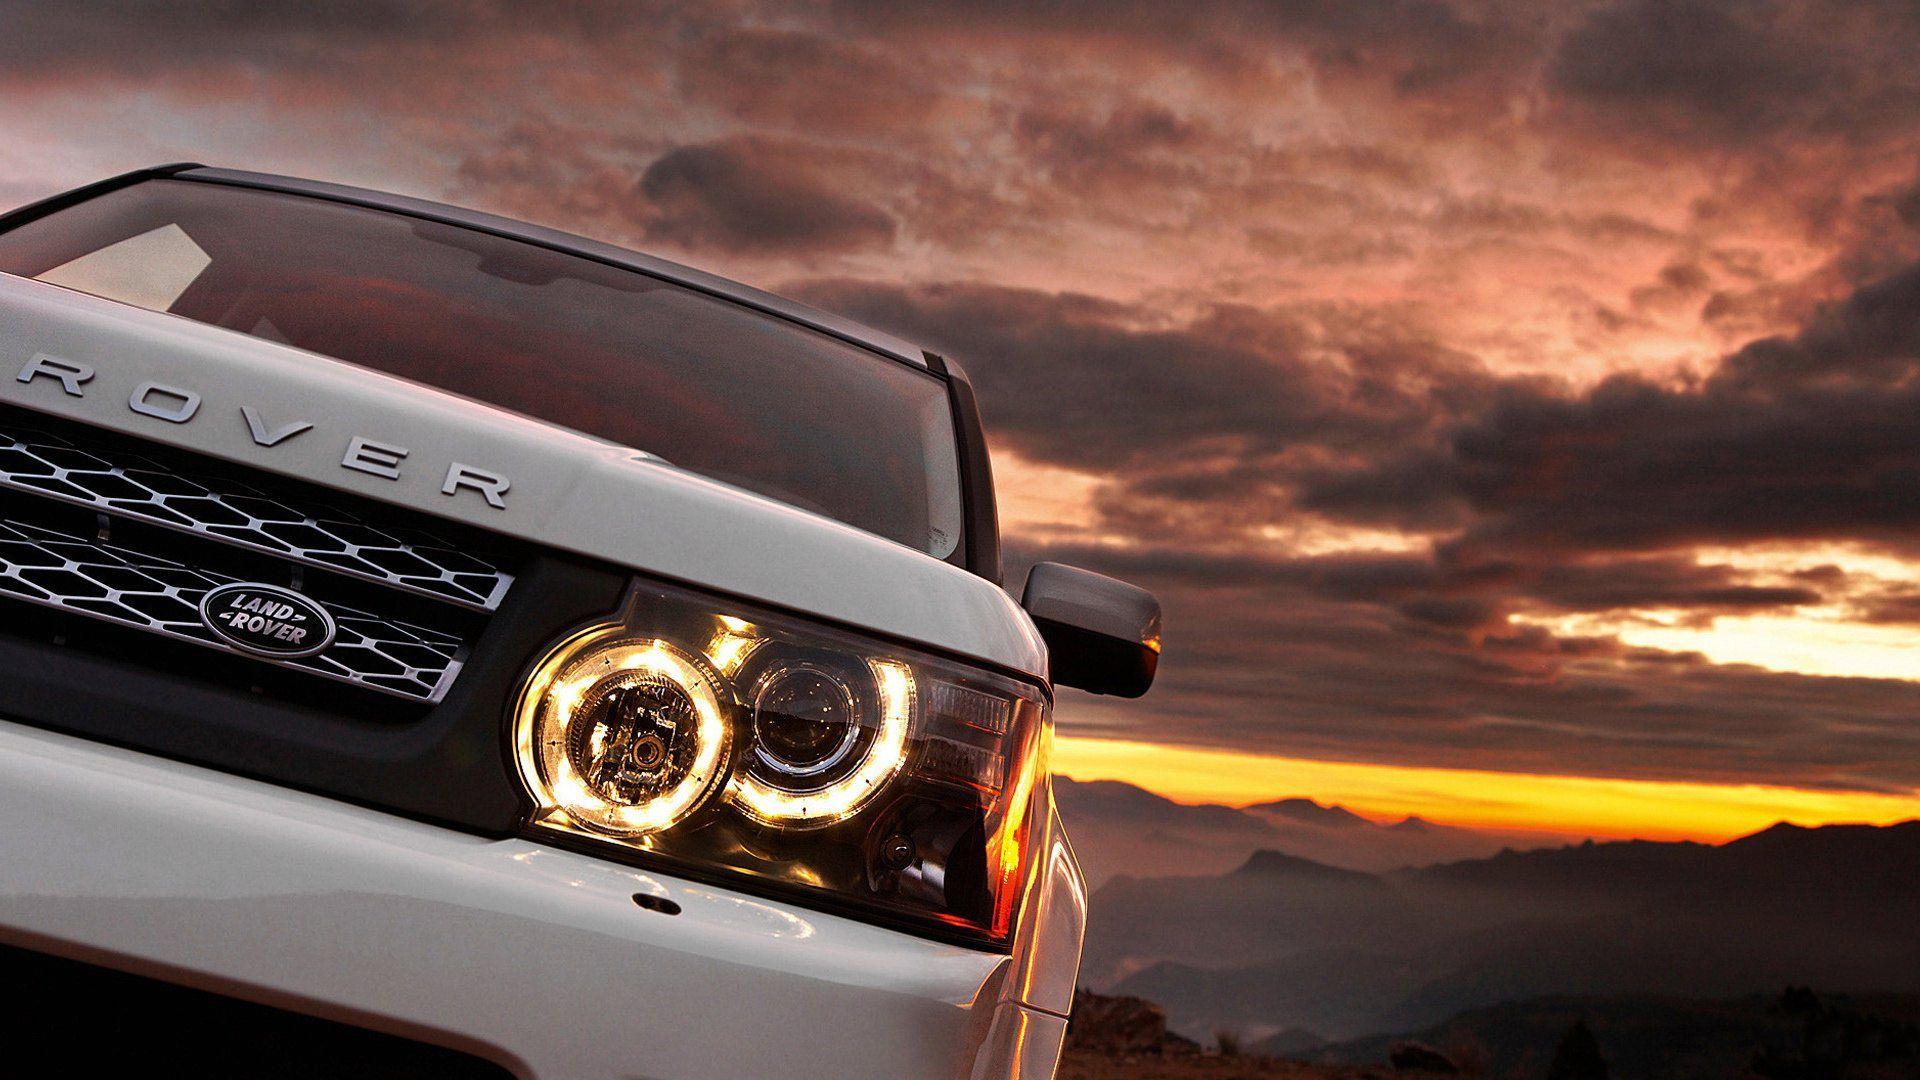 Range Rover Headlights Wallpaper. HD Wallpaper Background